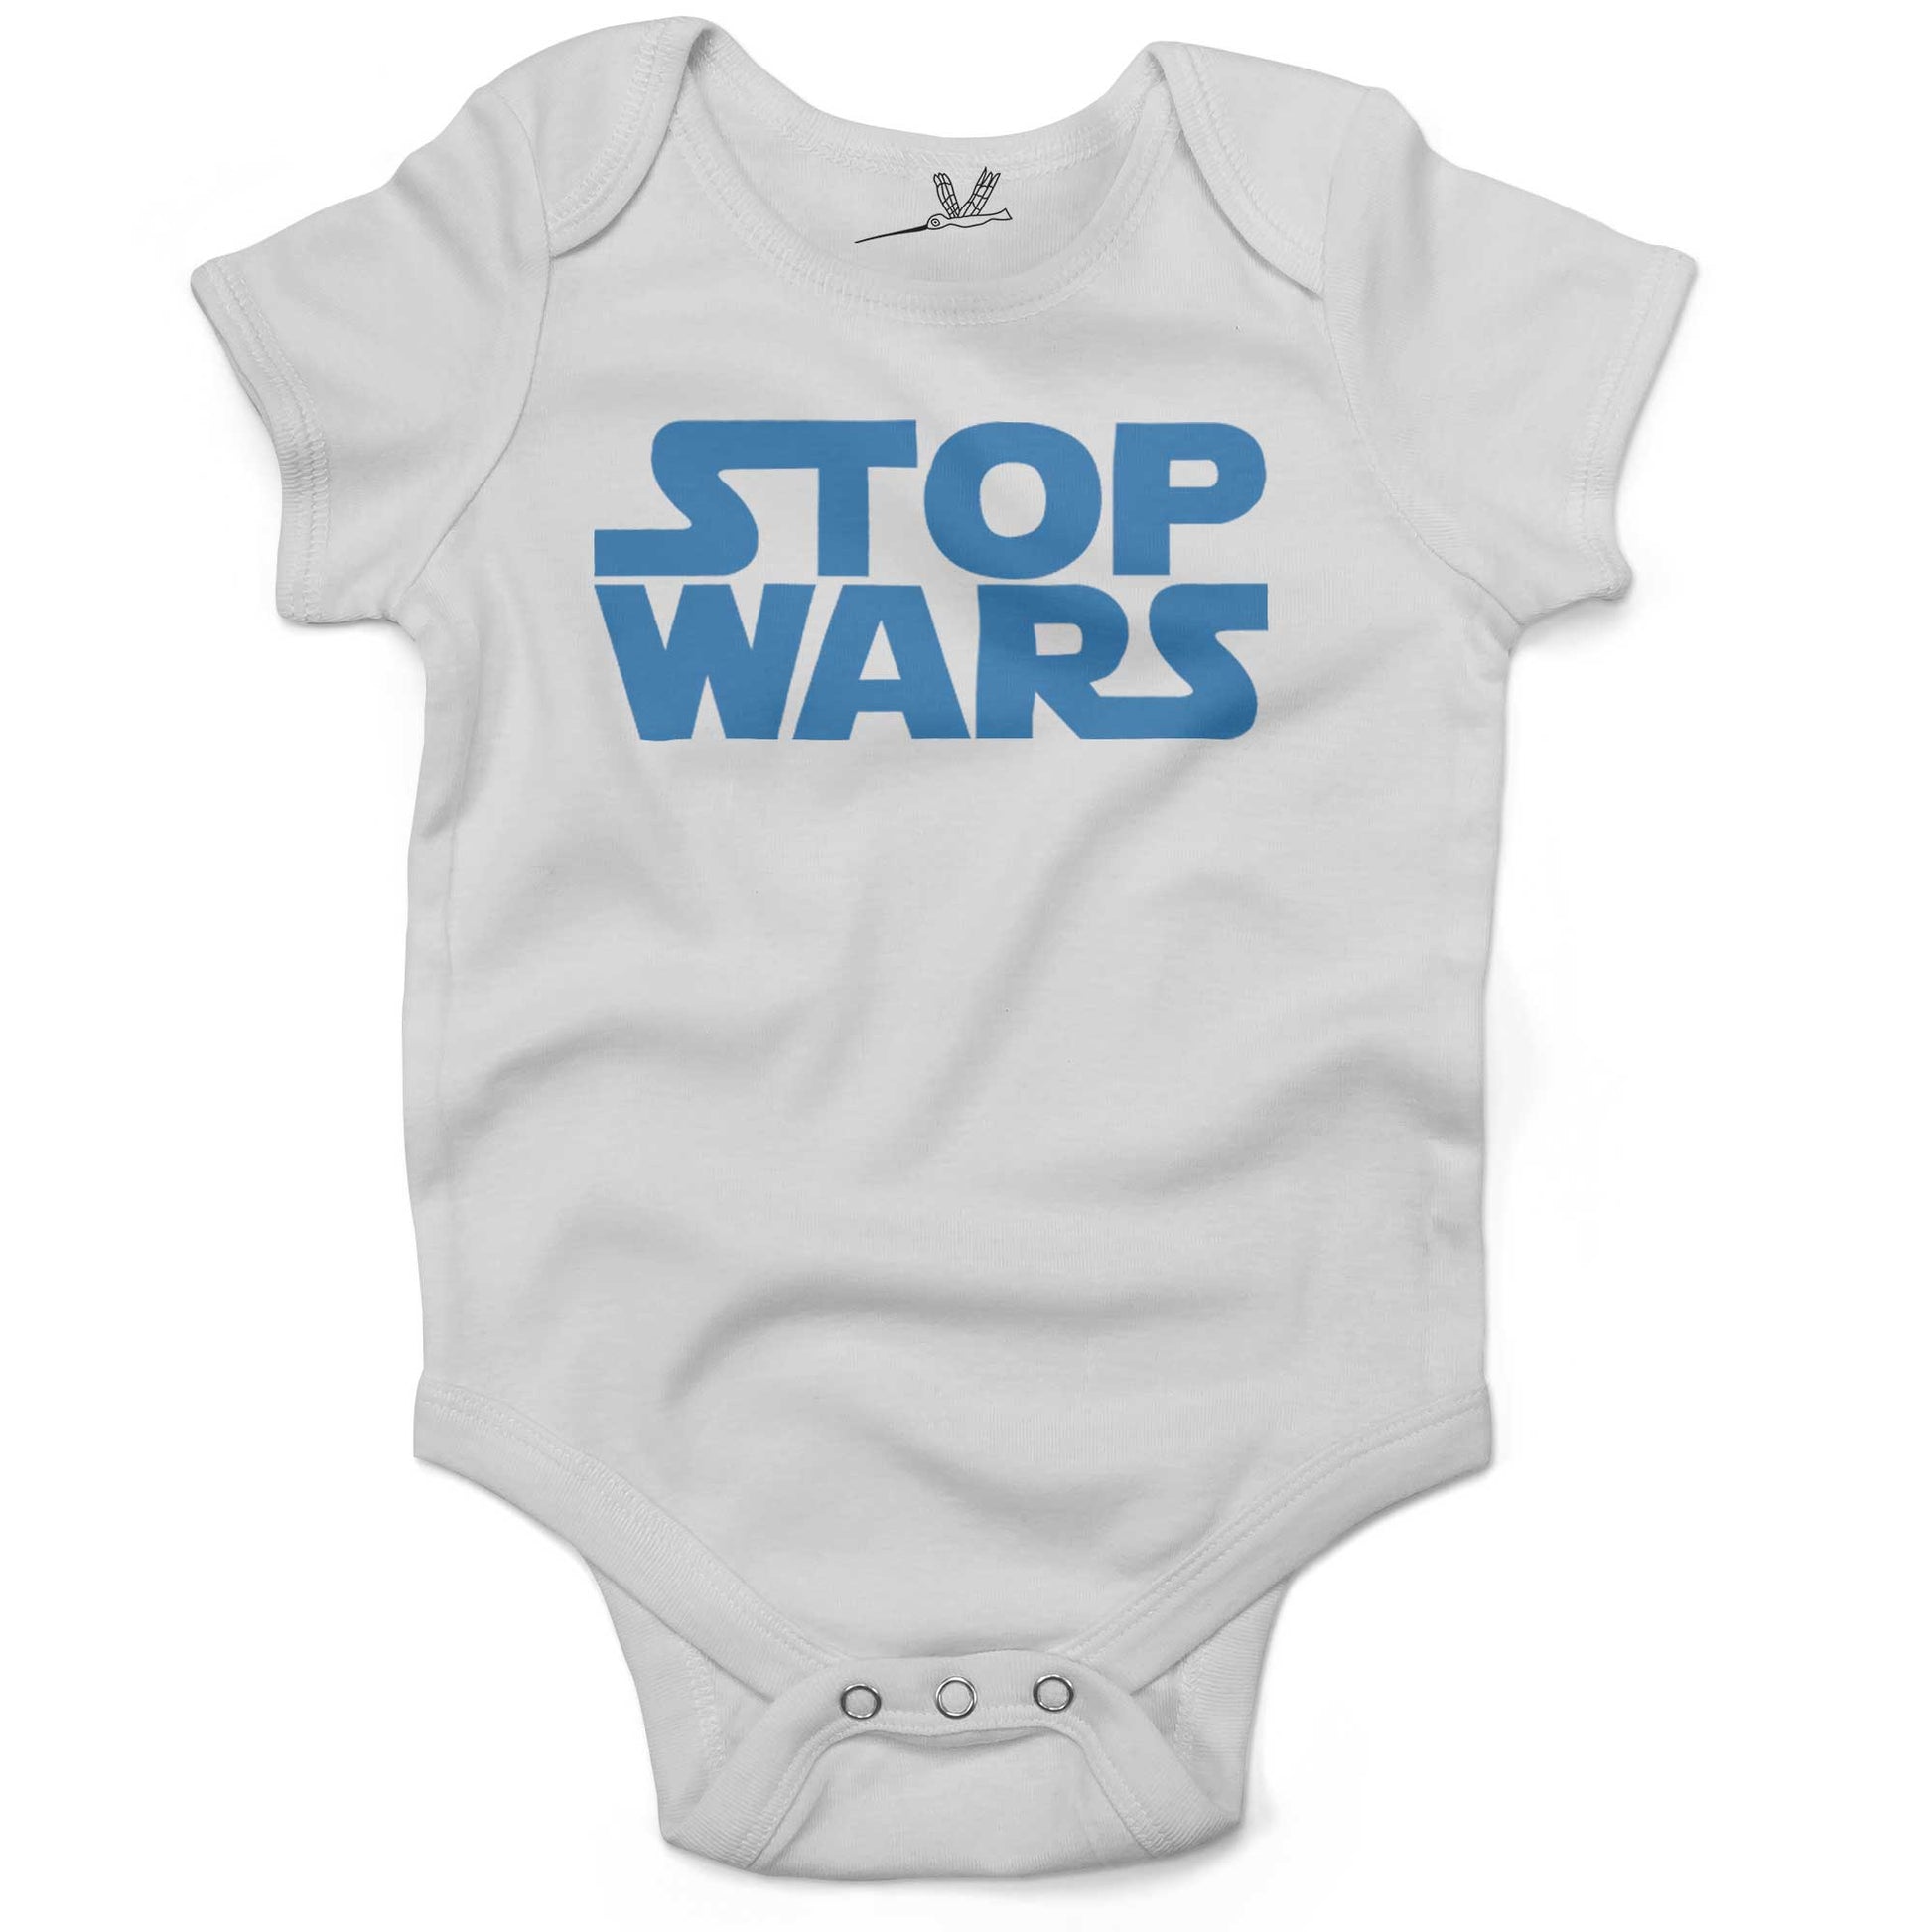 STOP WARS Infant Bodysuit or Raglan Baby Tee-White-3-6 months